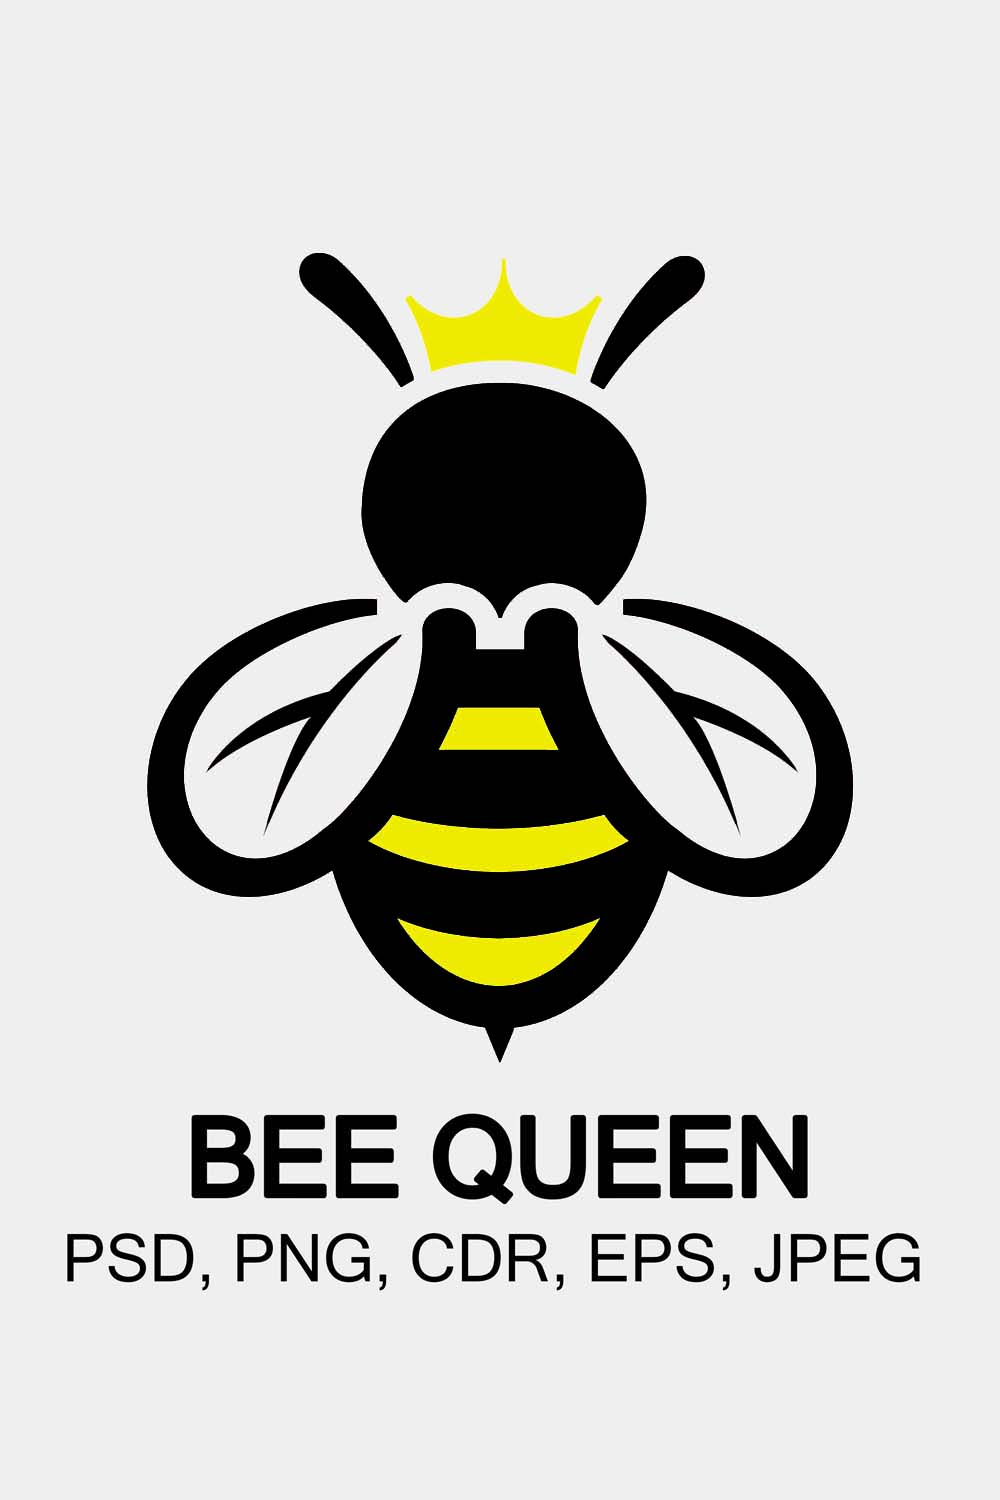 Creative Honey Bee Queen Logo pinterest preview image.